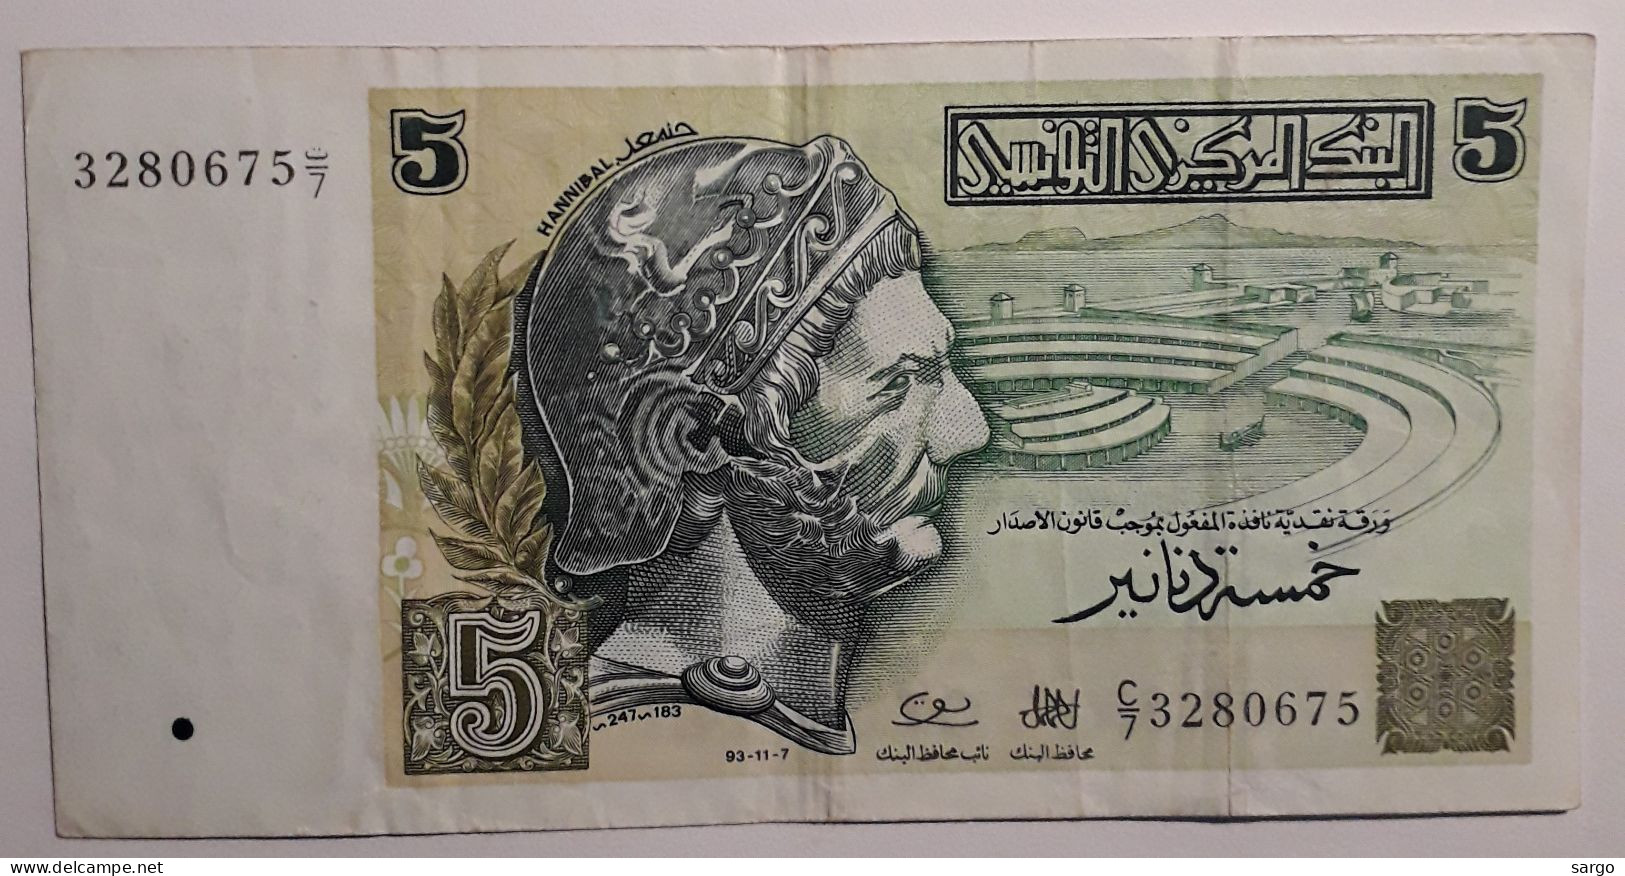 TUNISIA - 5 DINARS - 1993 - CIRC - P 86 - BANKNOTES - PAPER MONEY - CARTAMONETA - - Tunisie